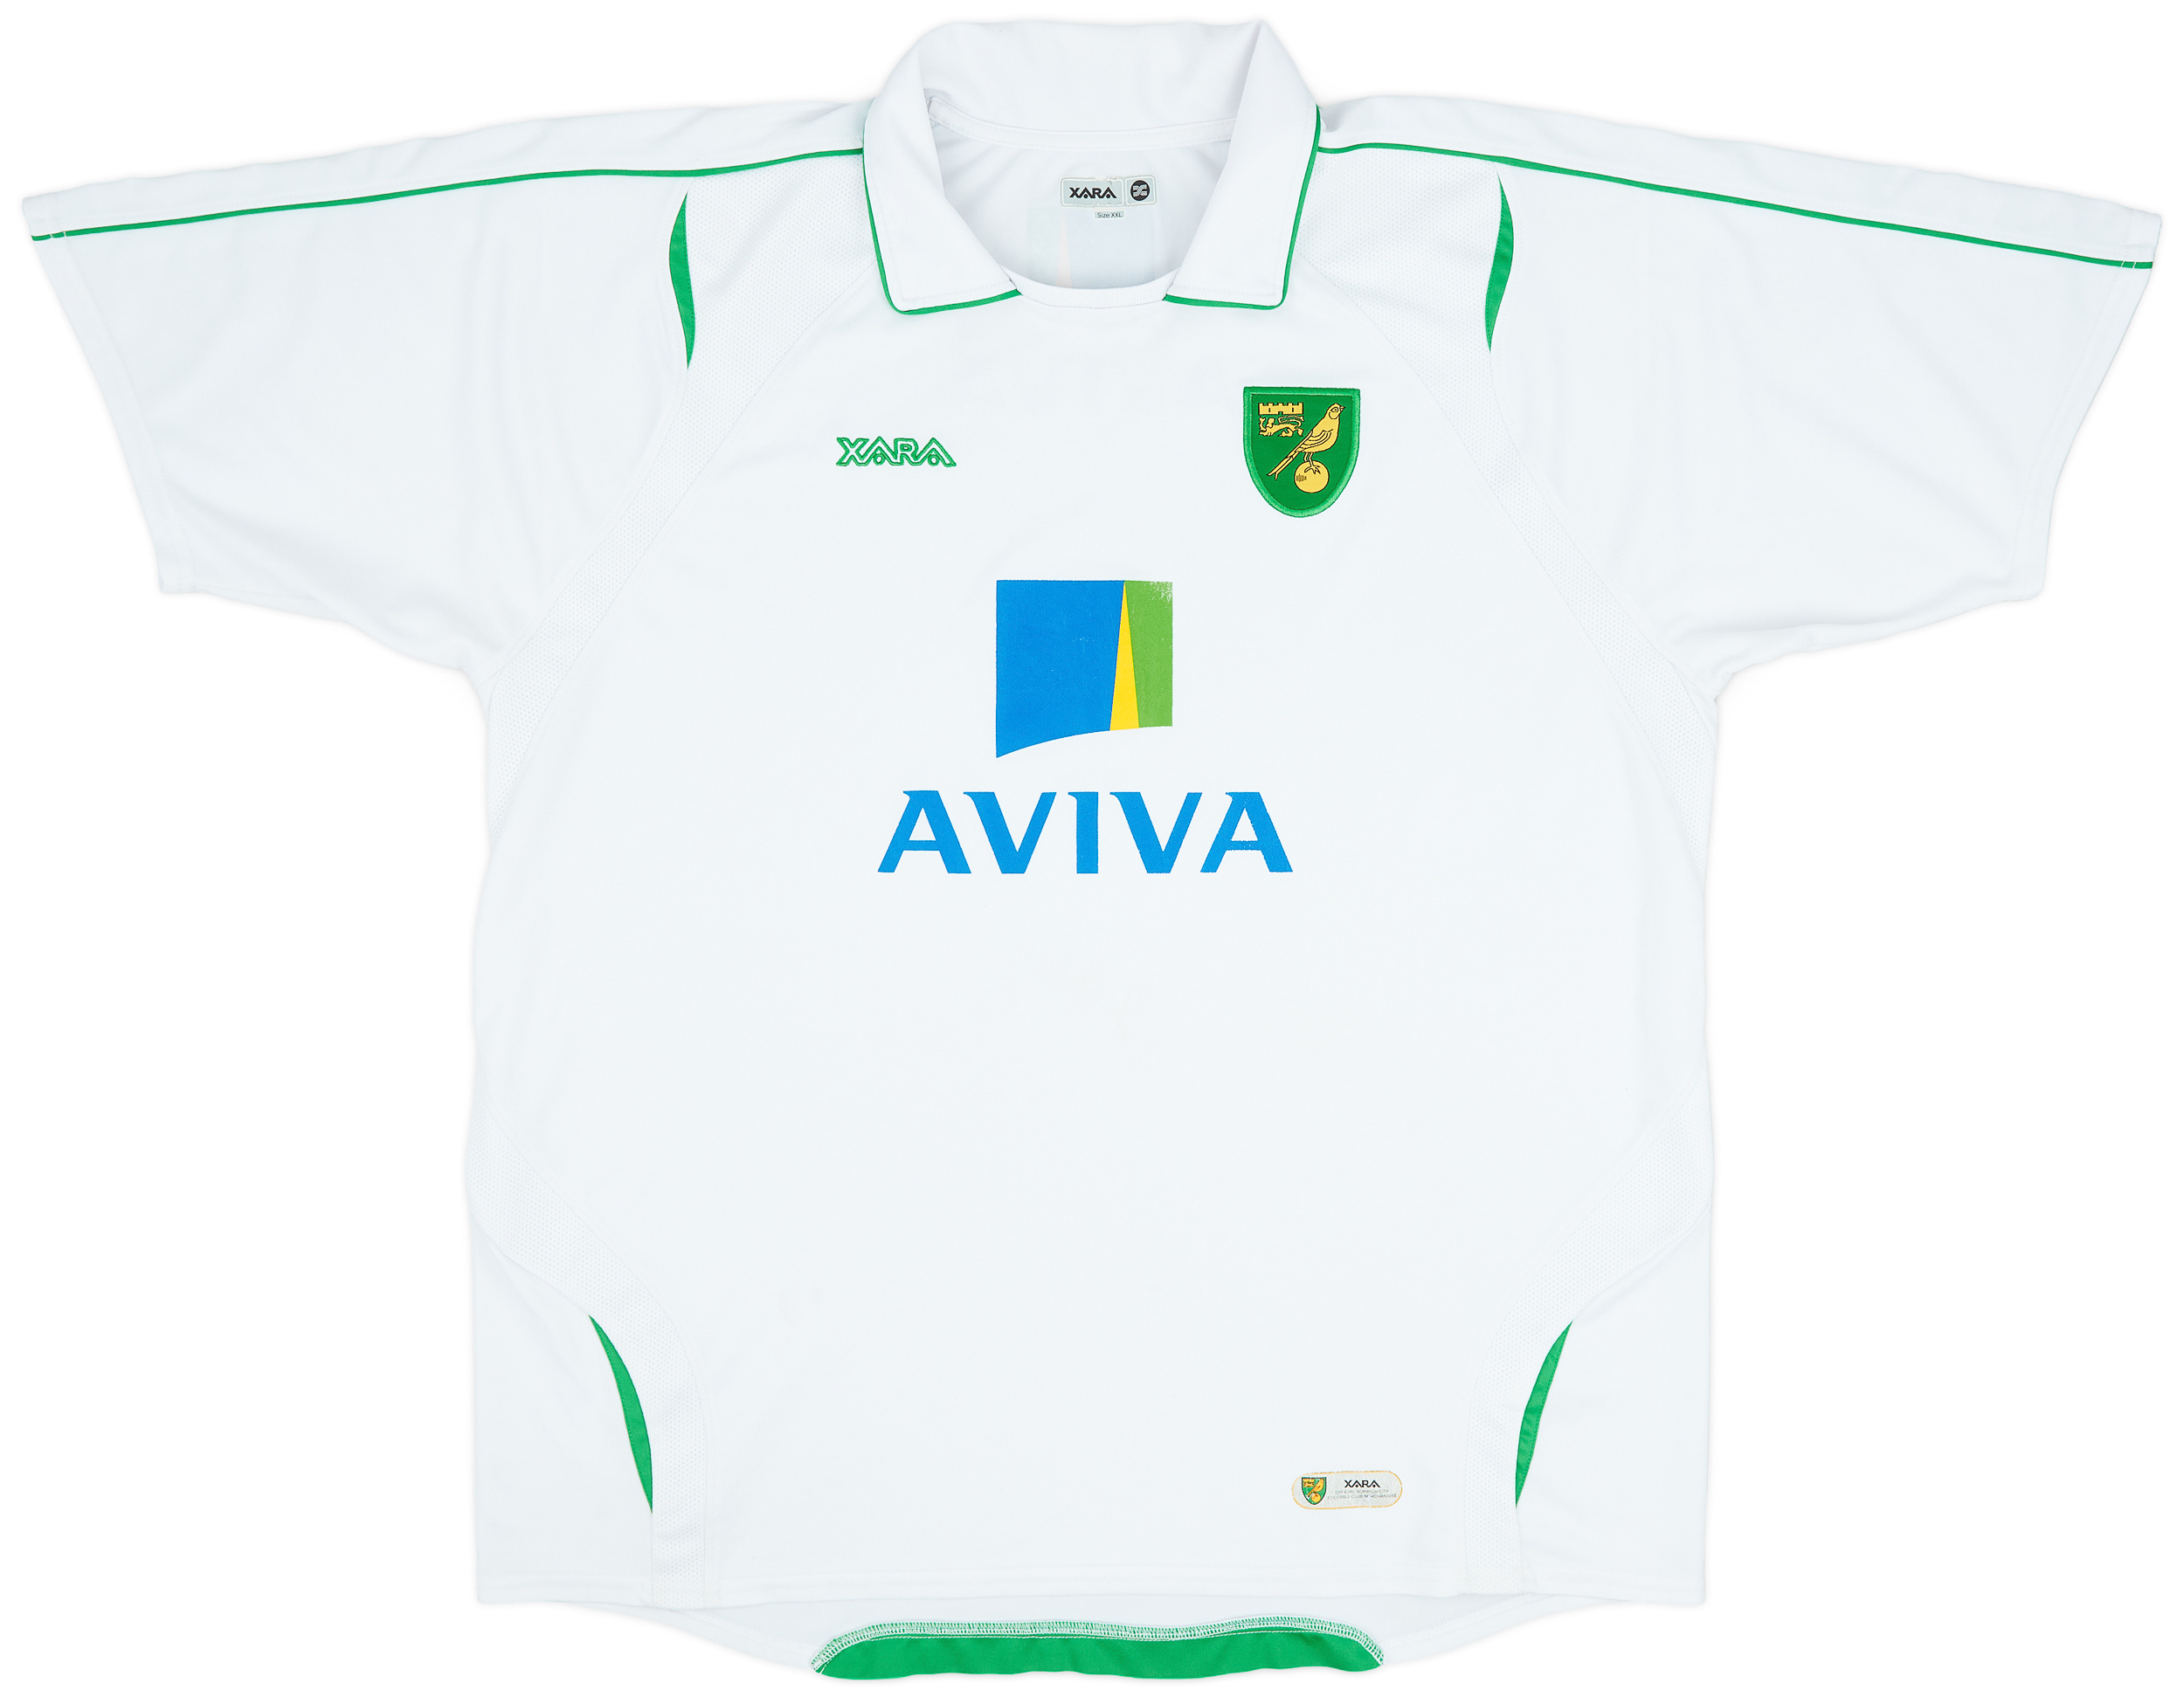 2009-11 Norwich City Away Shirt - 7/10 - ()